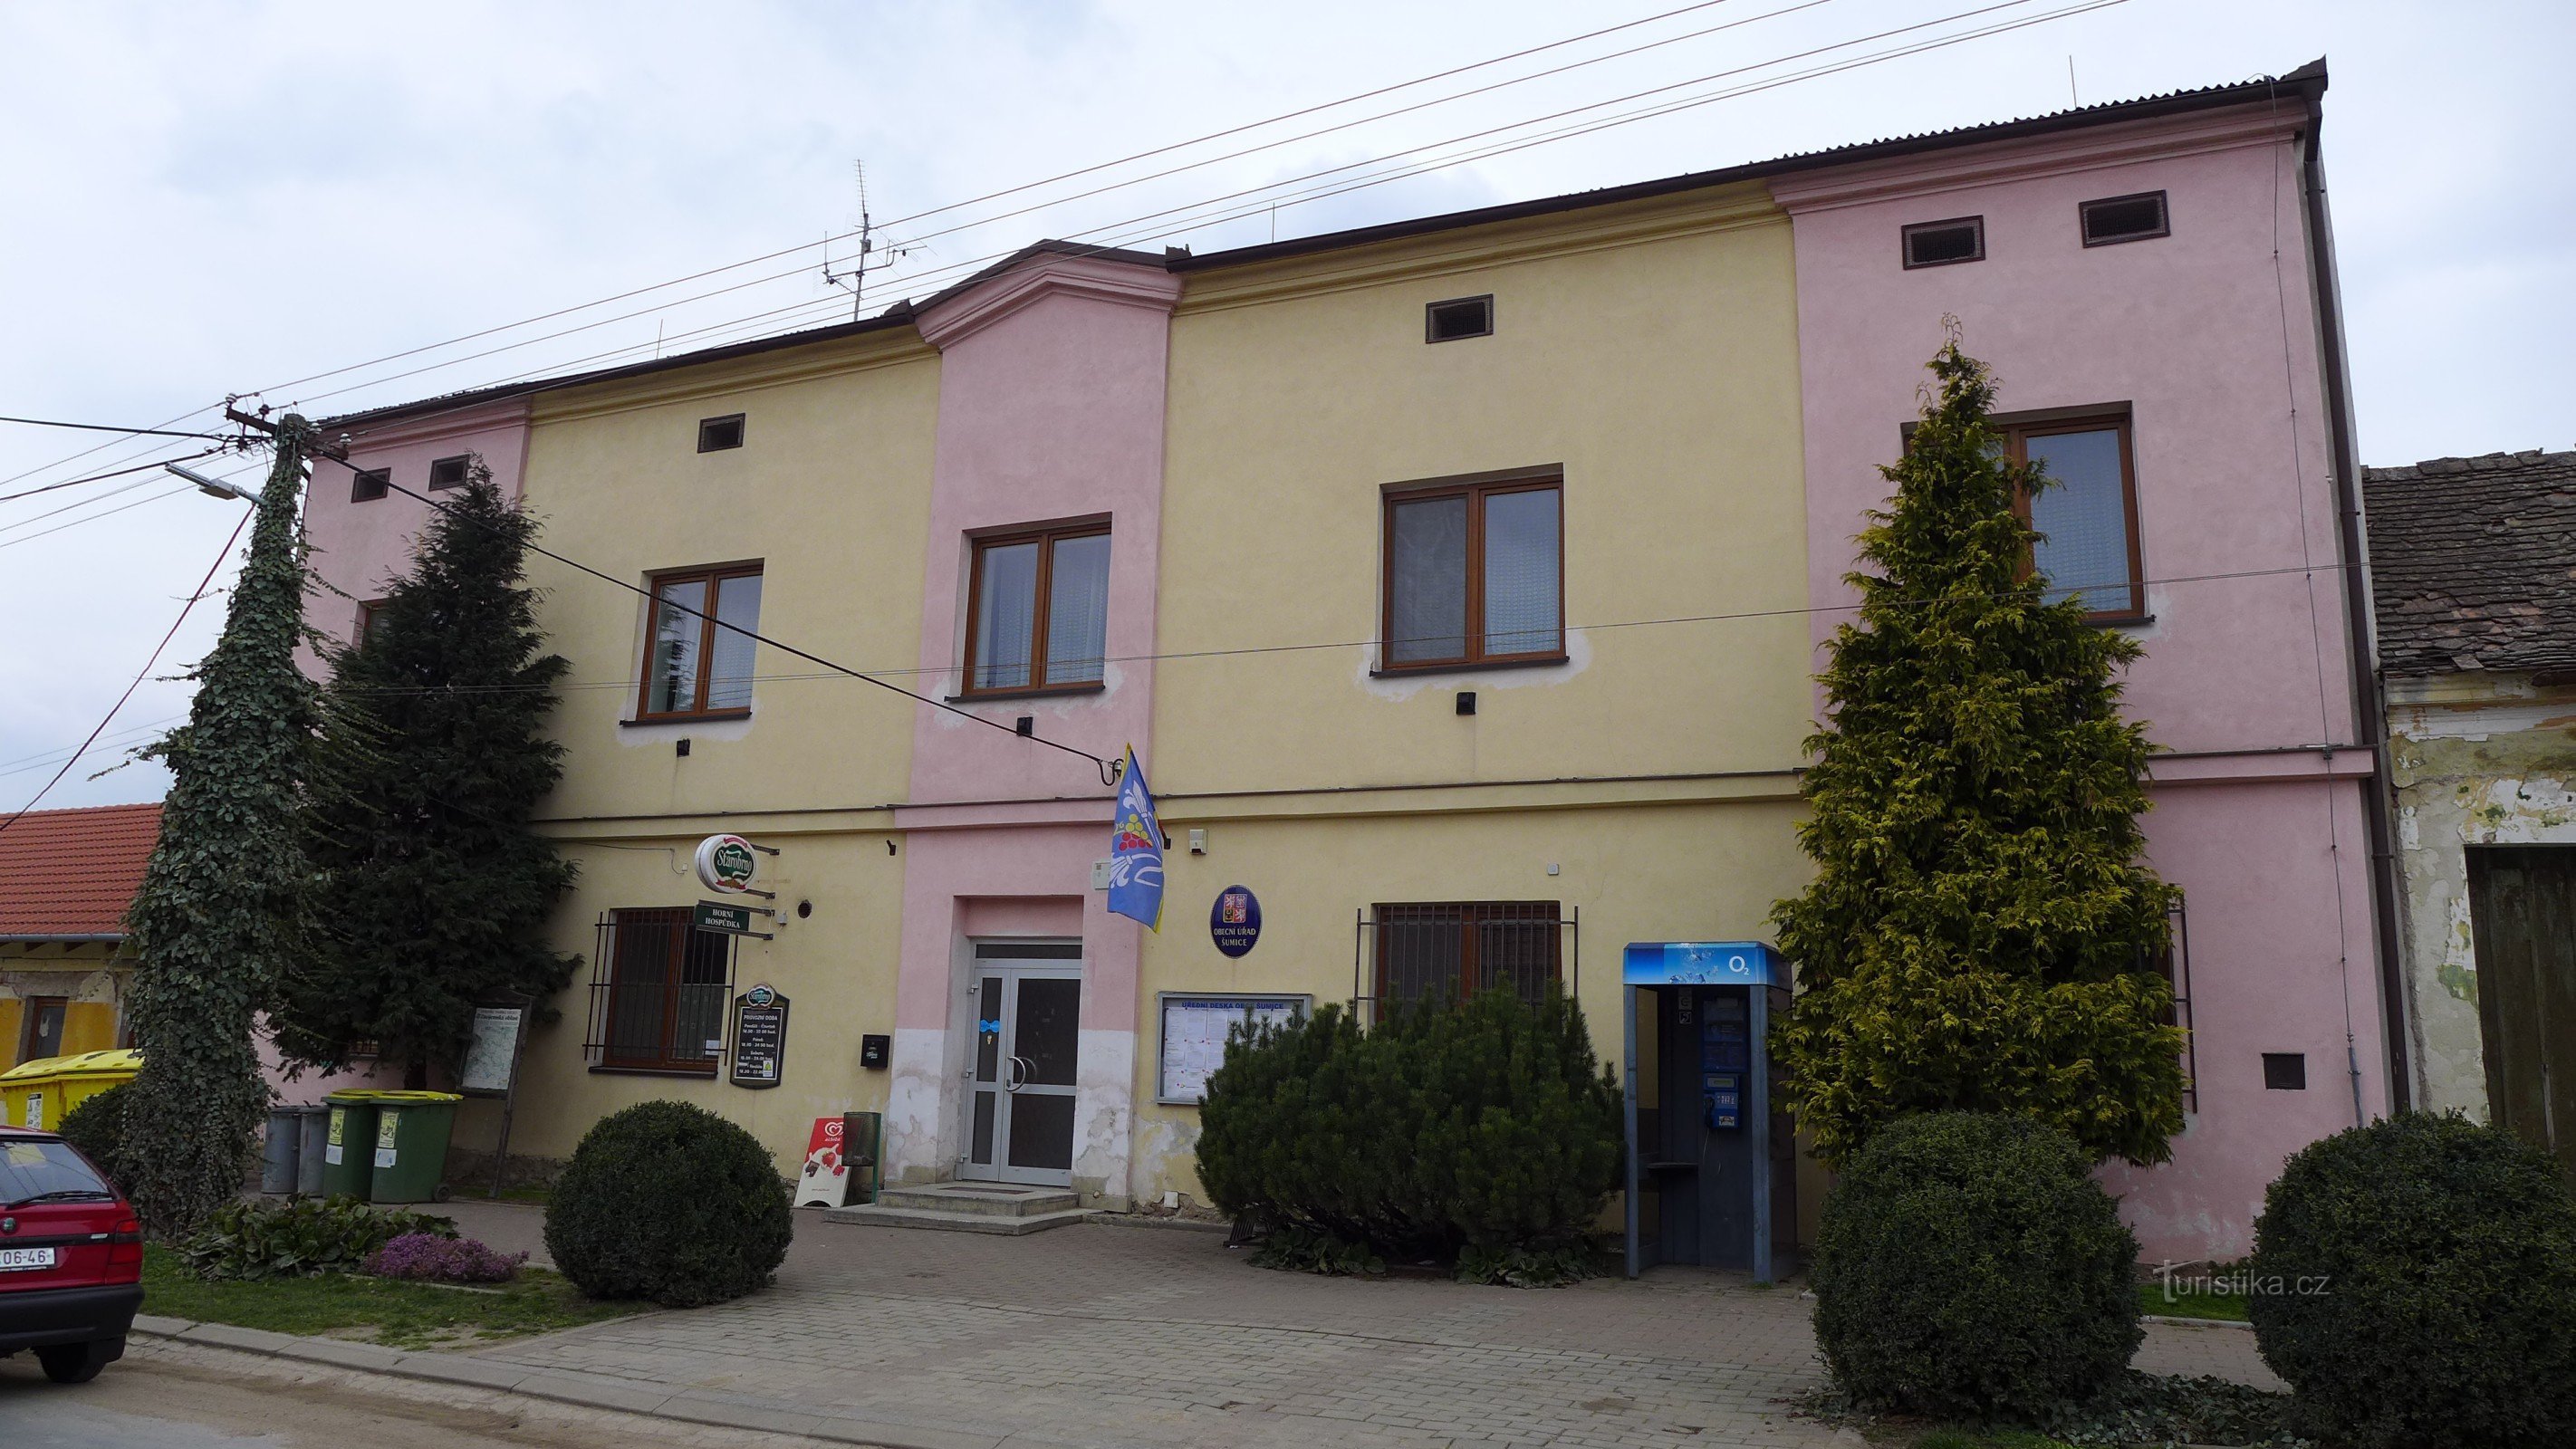 Šumice - kommunekontor